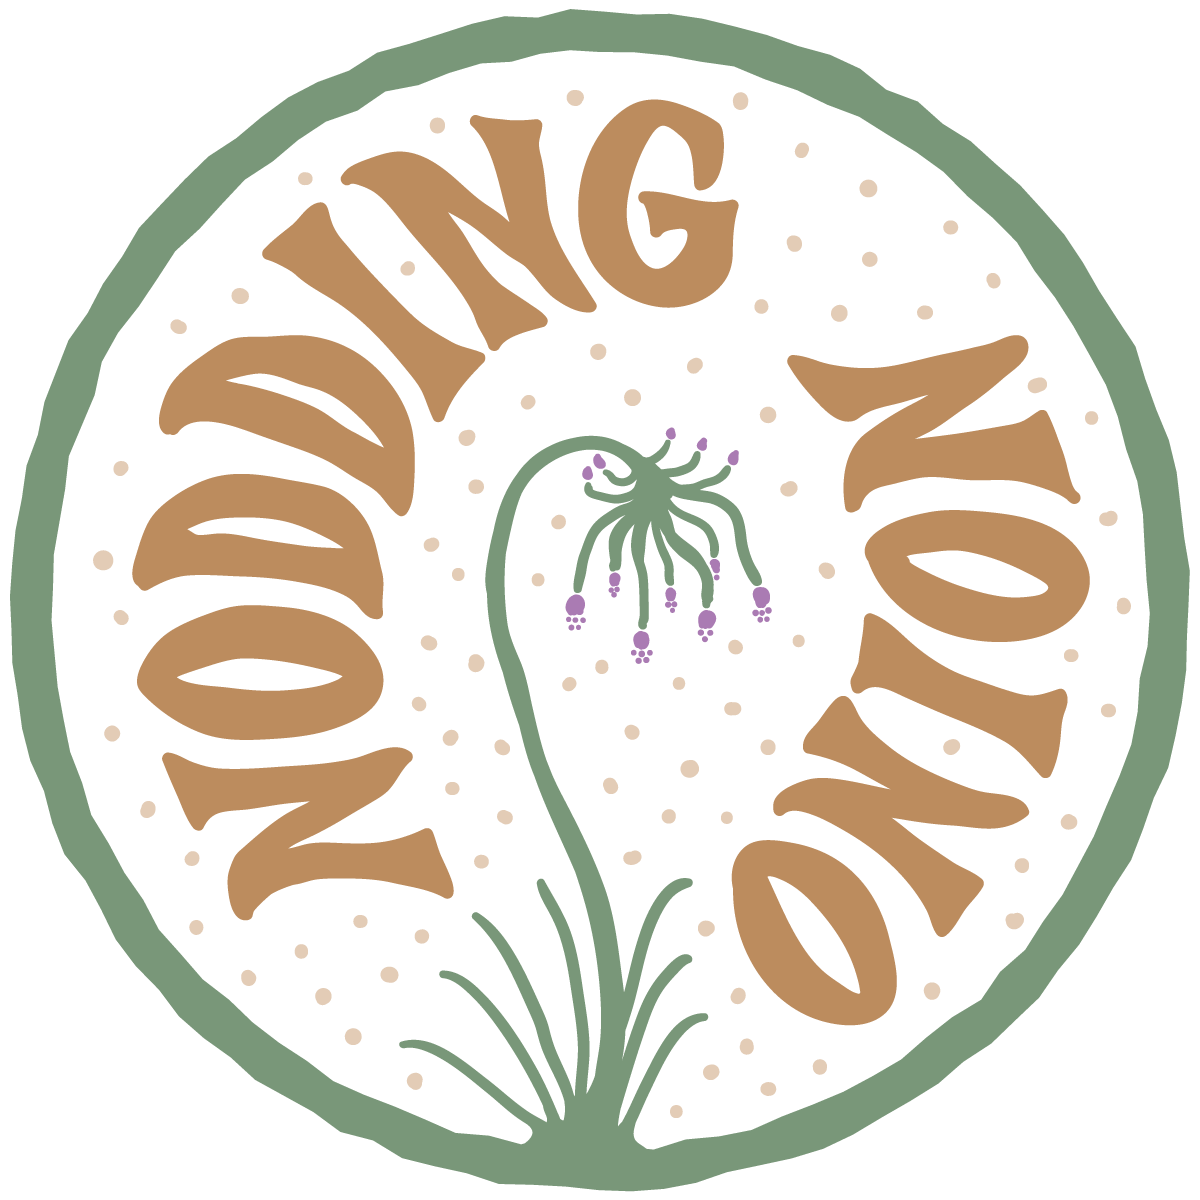 Nodding Onion logo